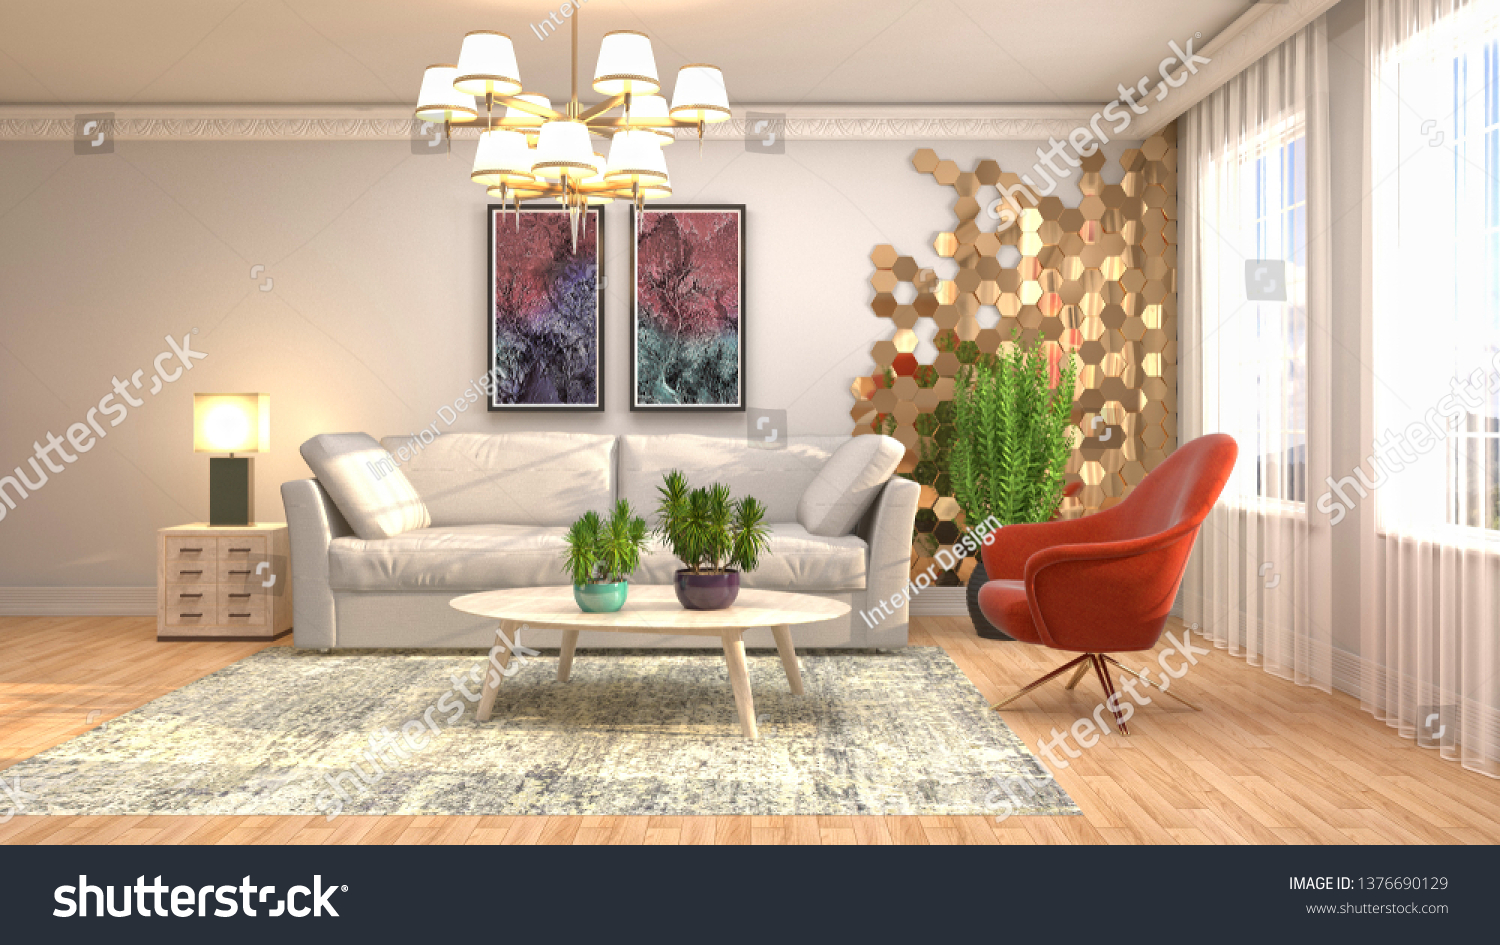 Interior of the living room. 3D illustration #1376690129